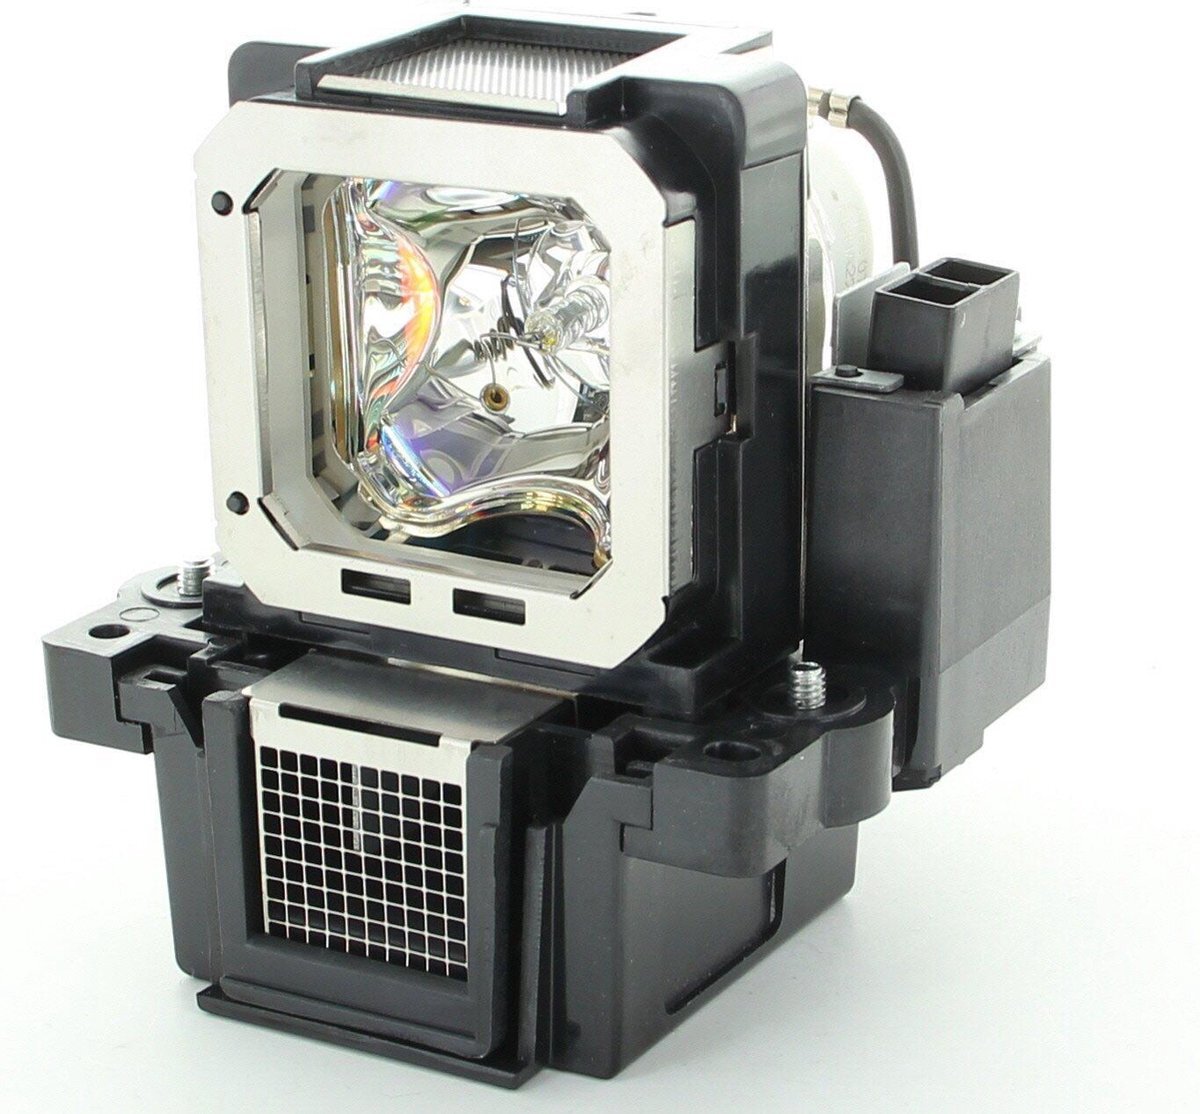 QualityLamp JVC DLA-RS600E beamerlamp PK-L2615U / PK-L2615UG, bevat originele NSHA lamp. Prestaties gelijk aan origineel.